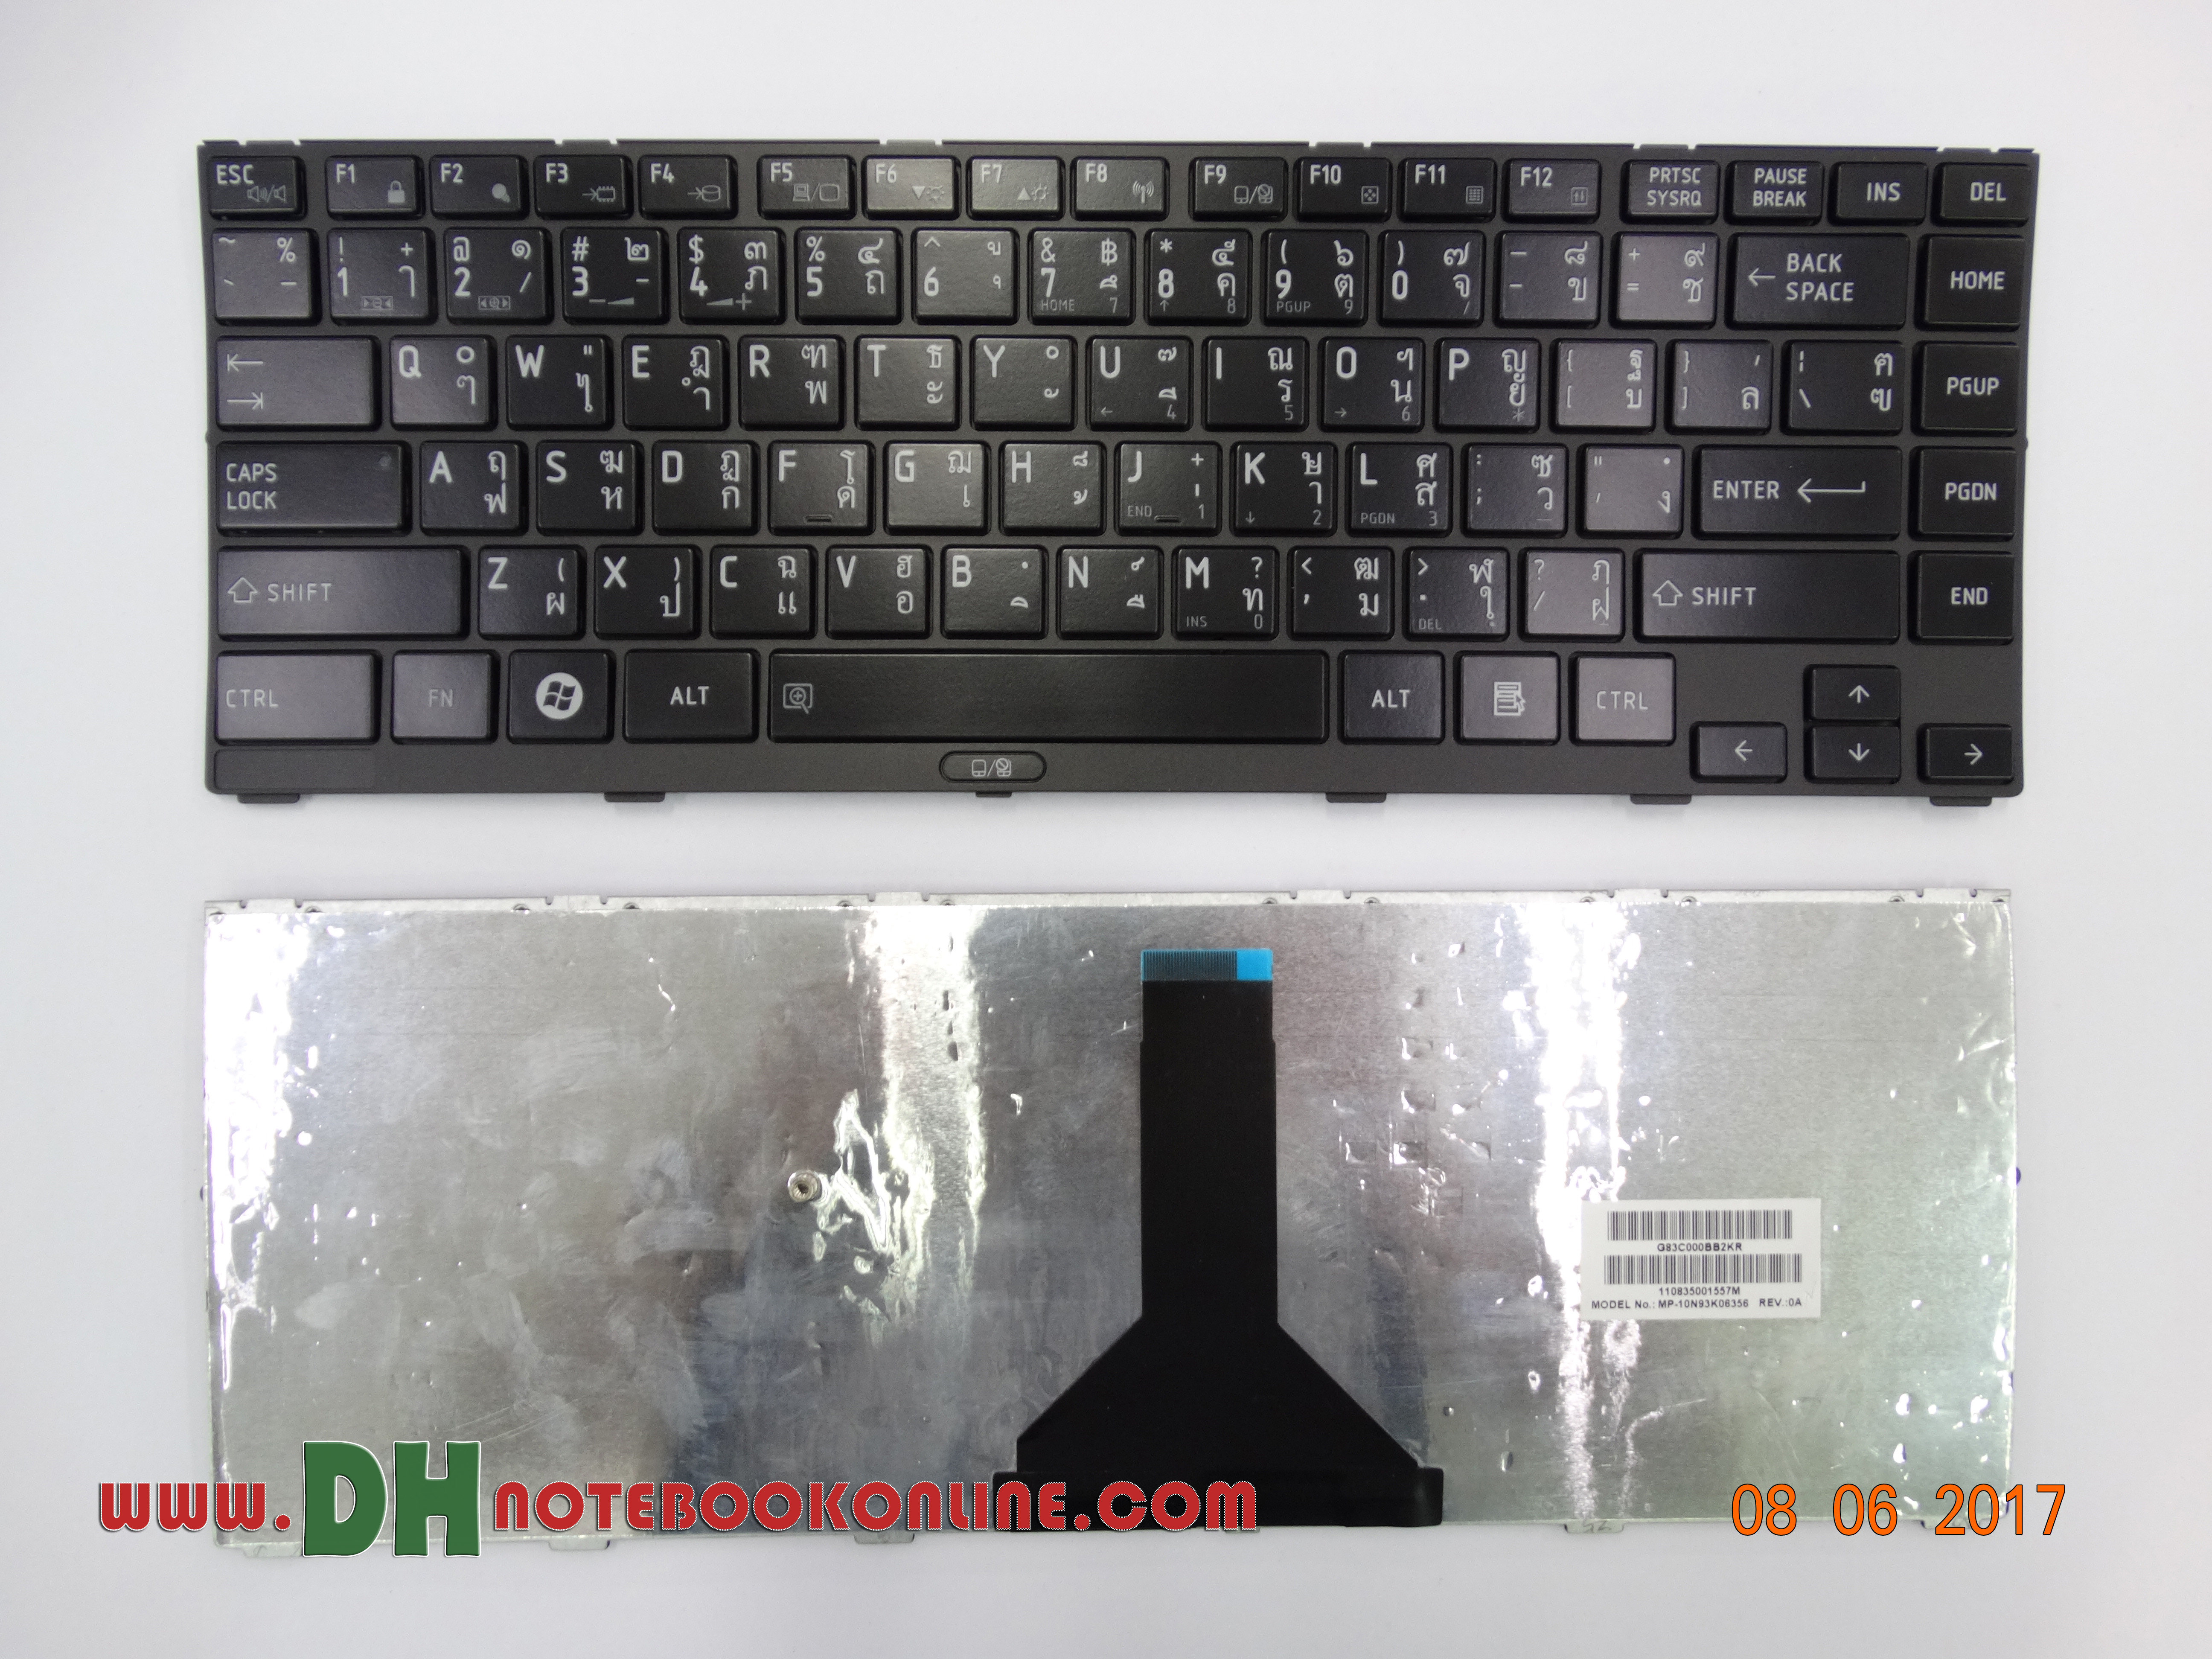 Toshiba R845 Keyboard